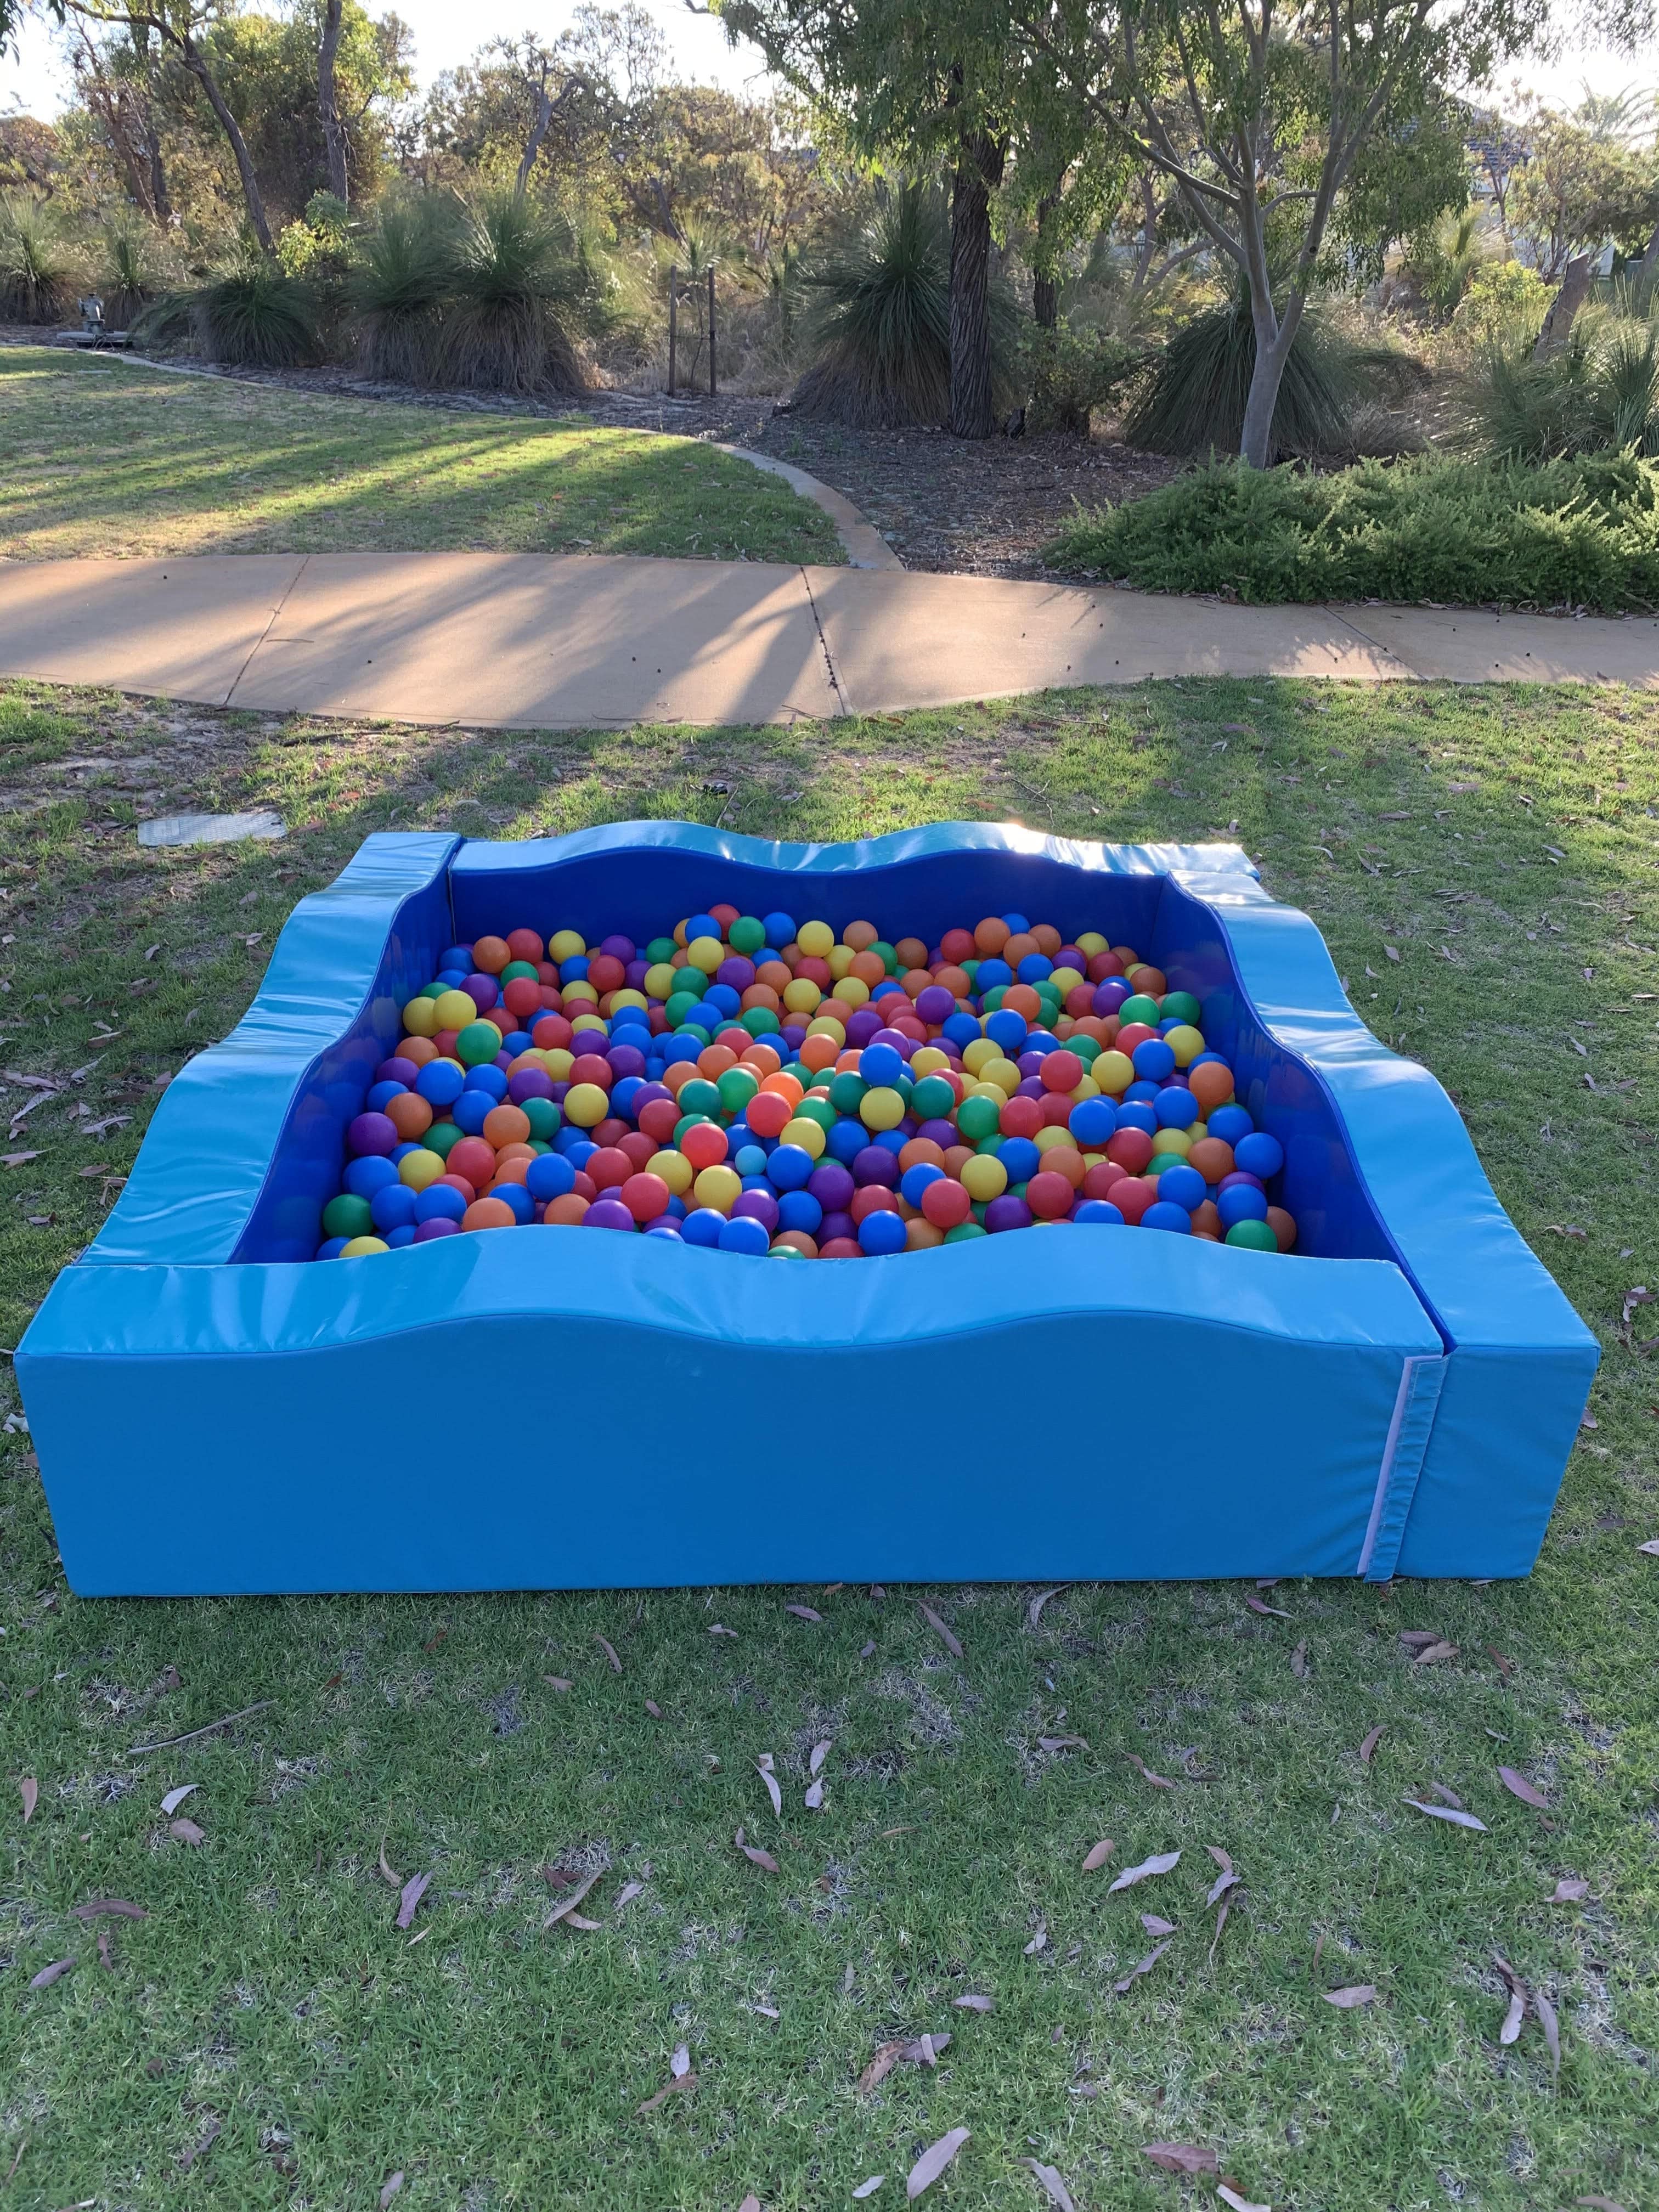 Buggybuddys - Fun HQ - Perth Kids Soft Play, Ball Pits and